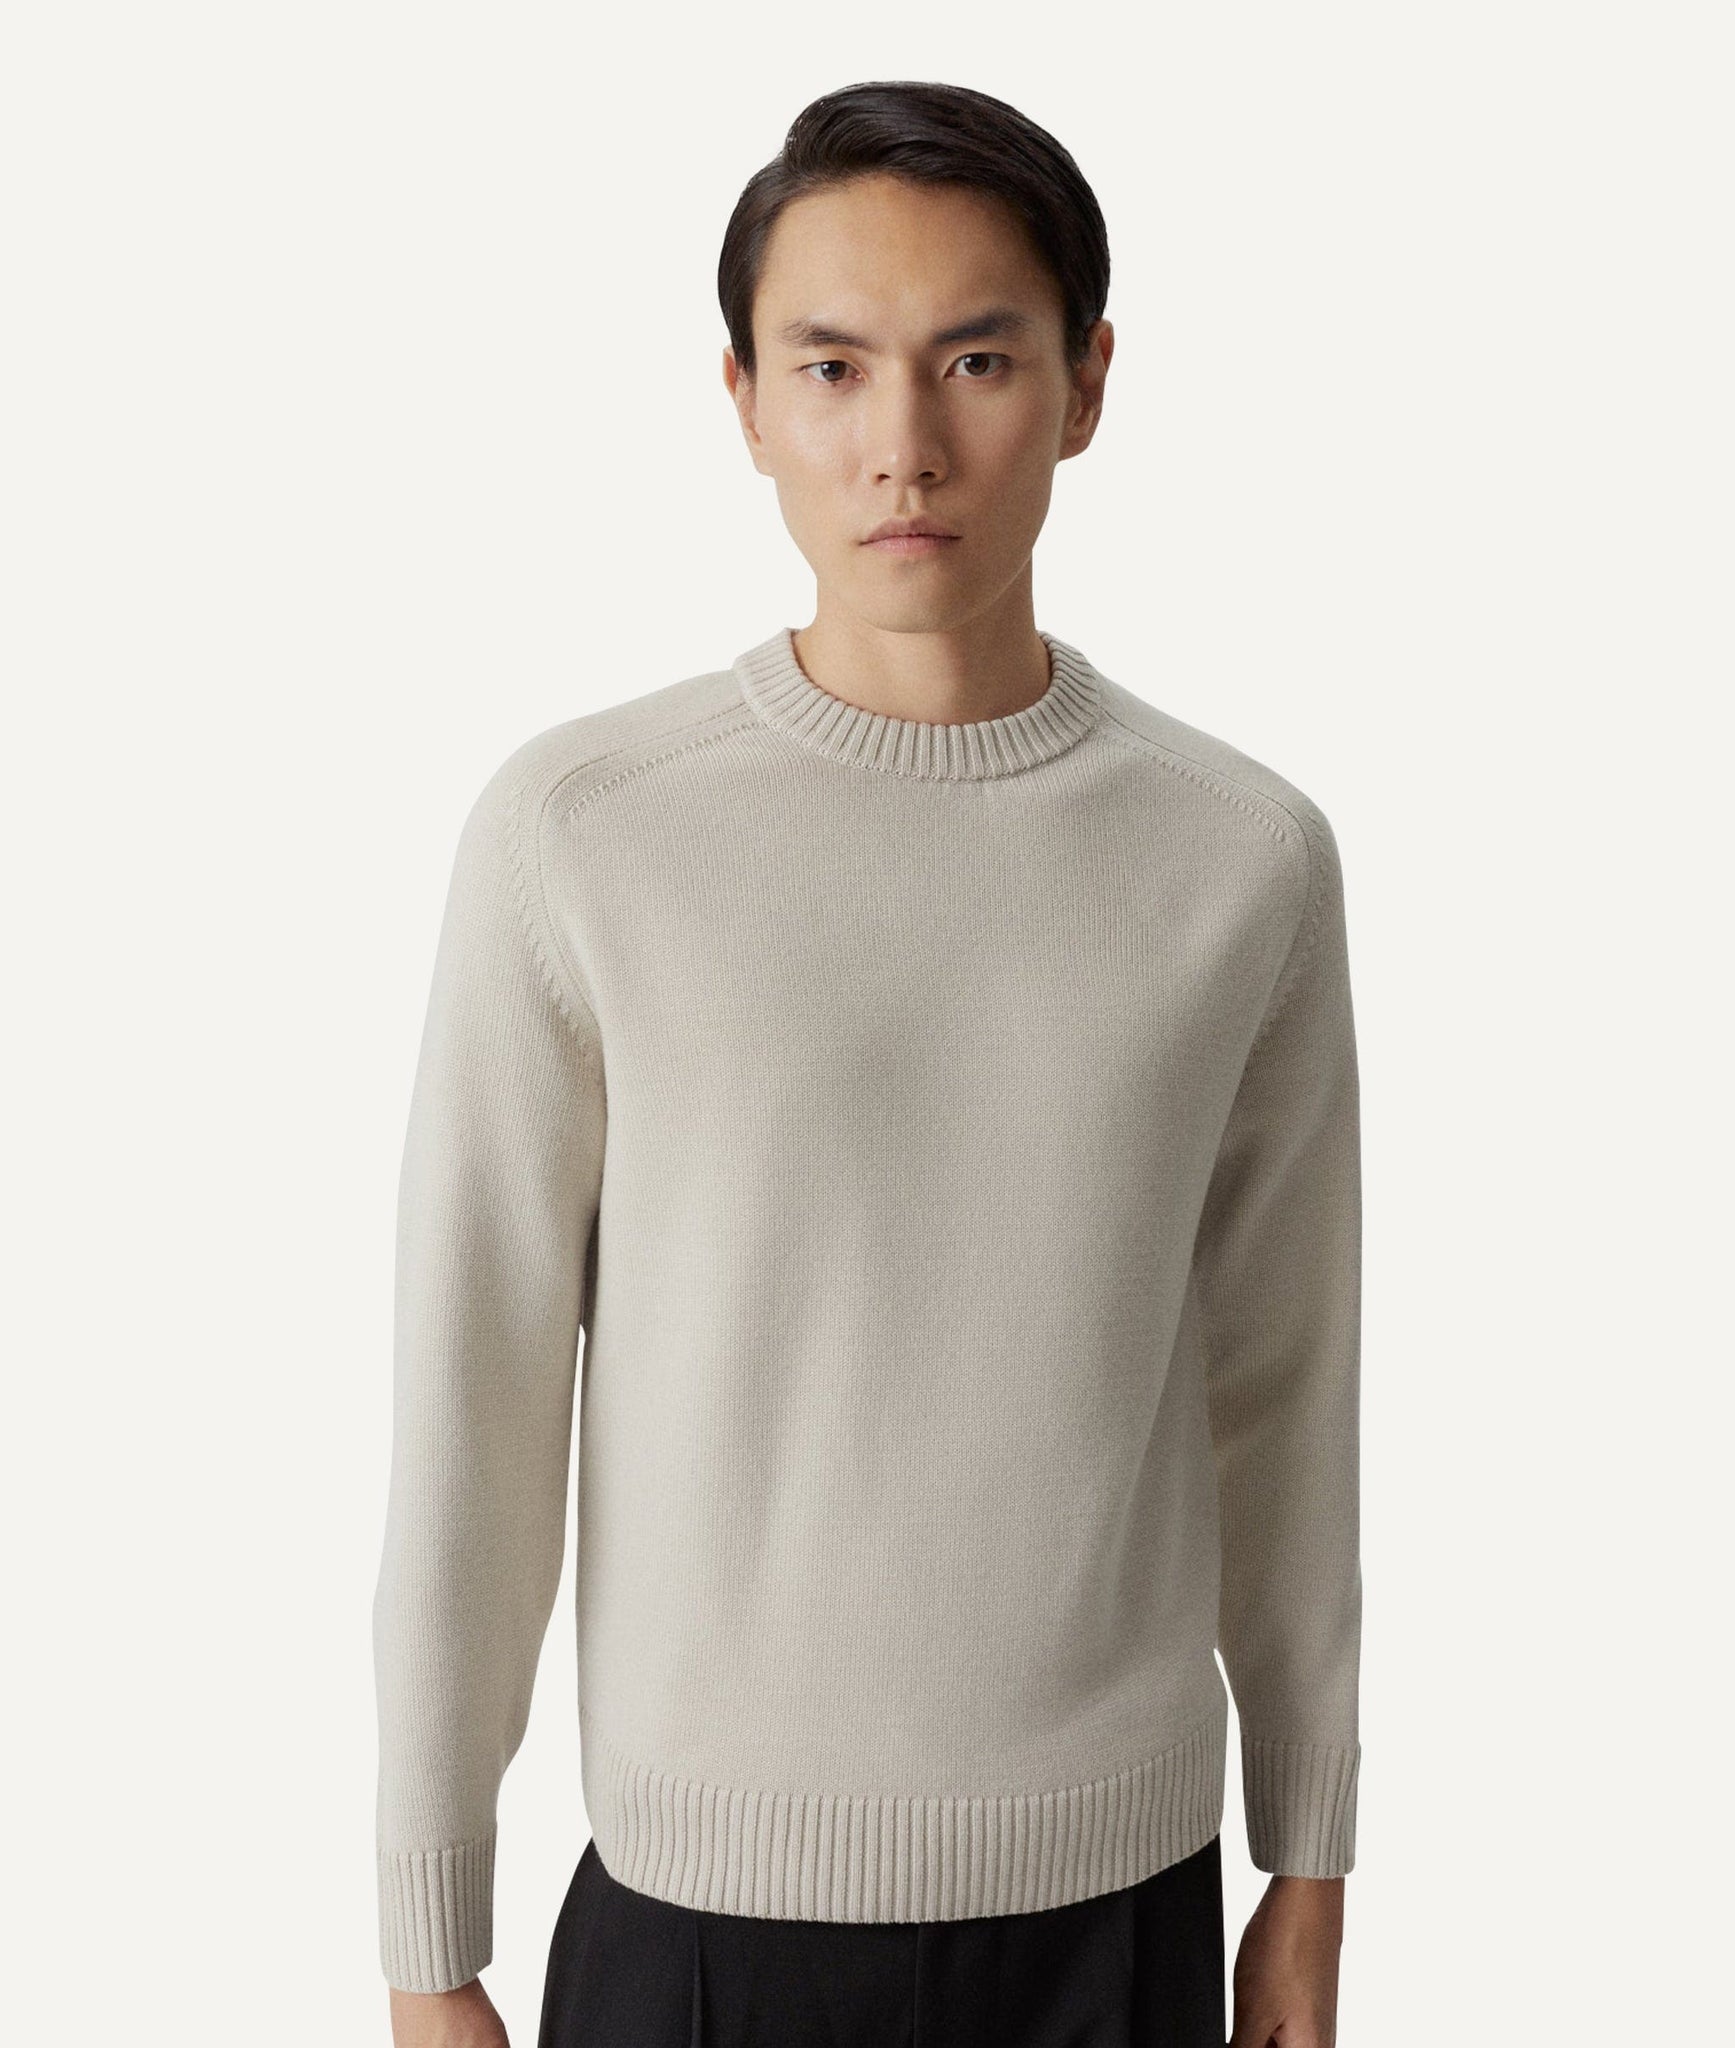 The Merino Wool Saddle Shoulder Sweater